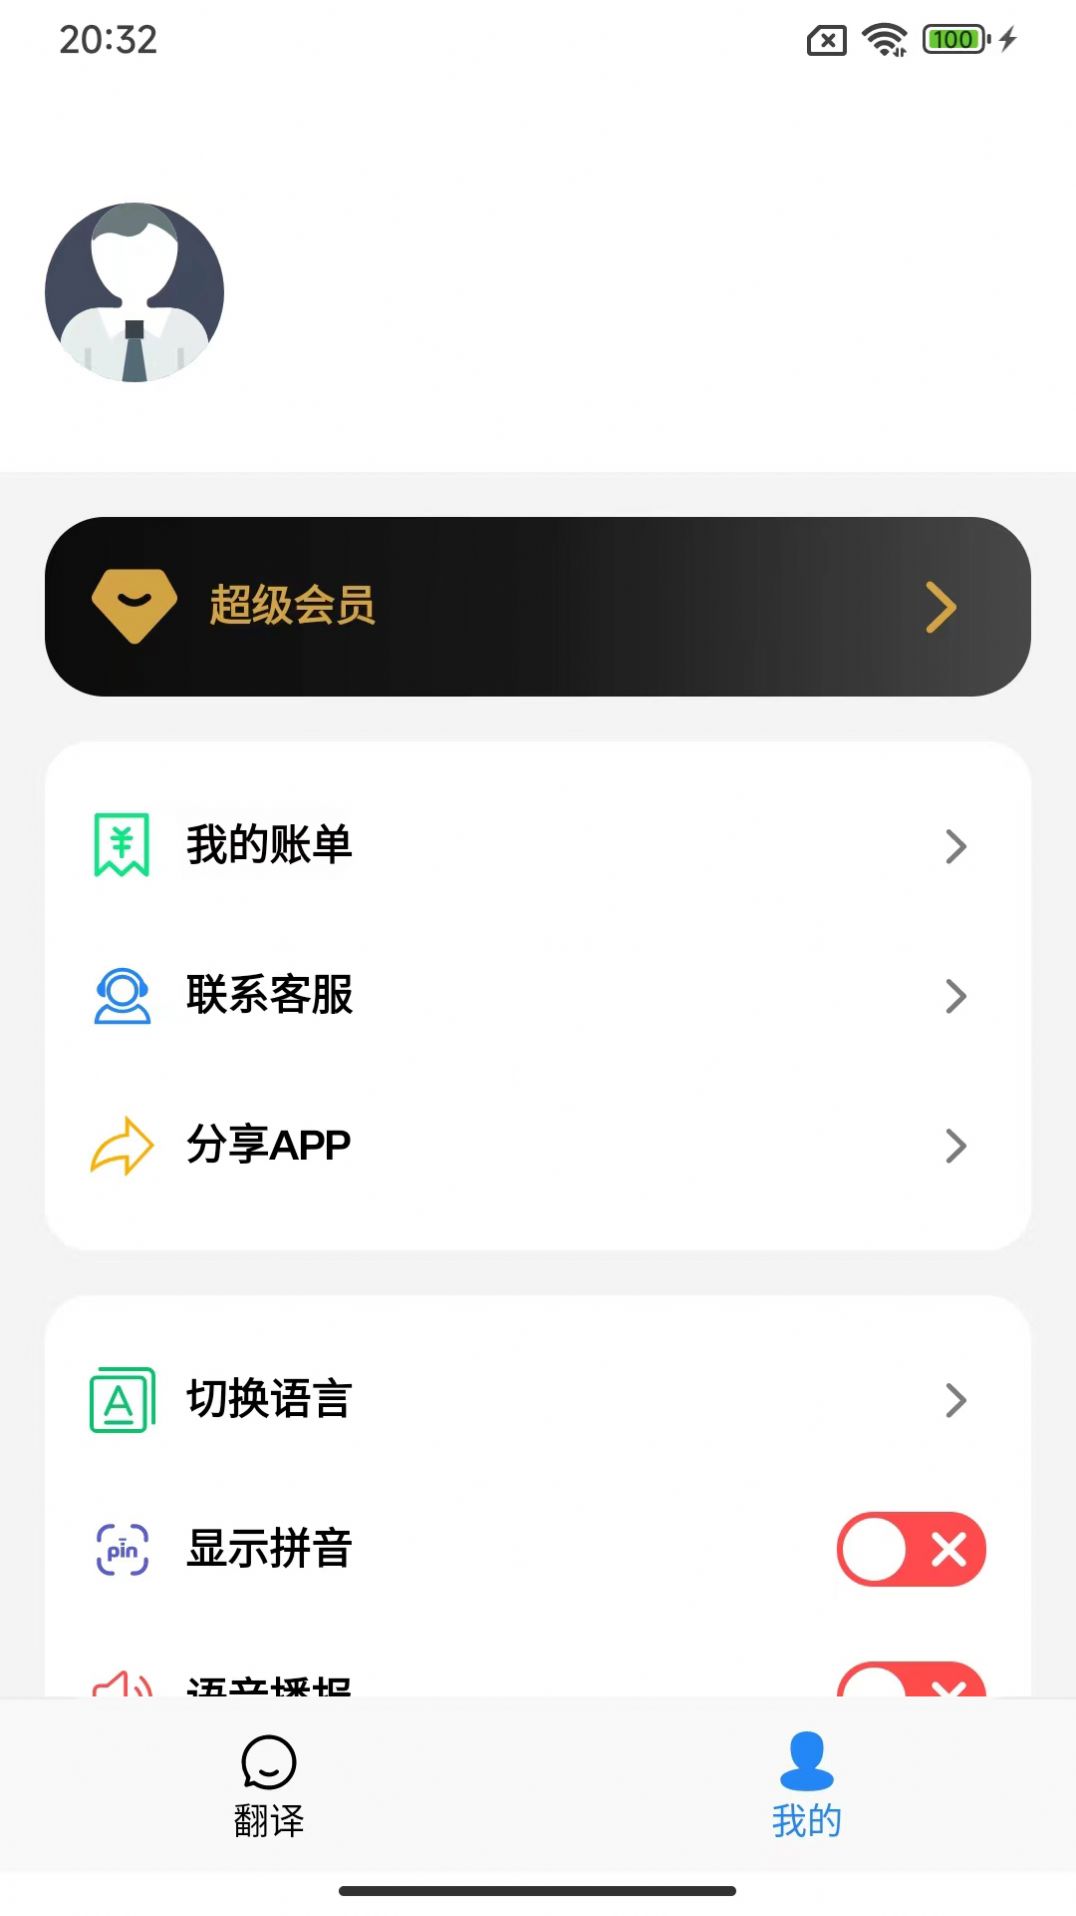 xalhar翻译app图2